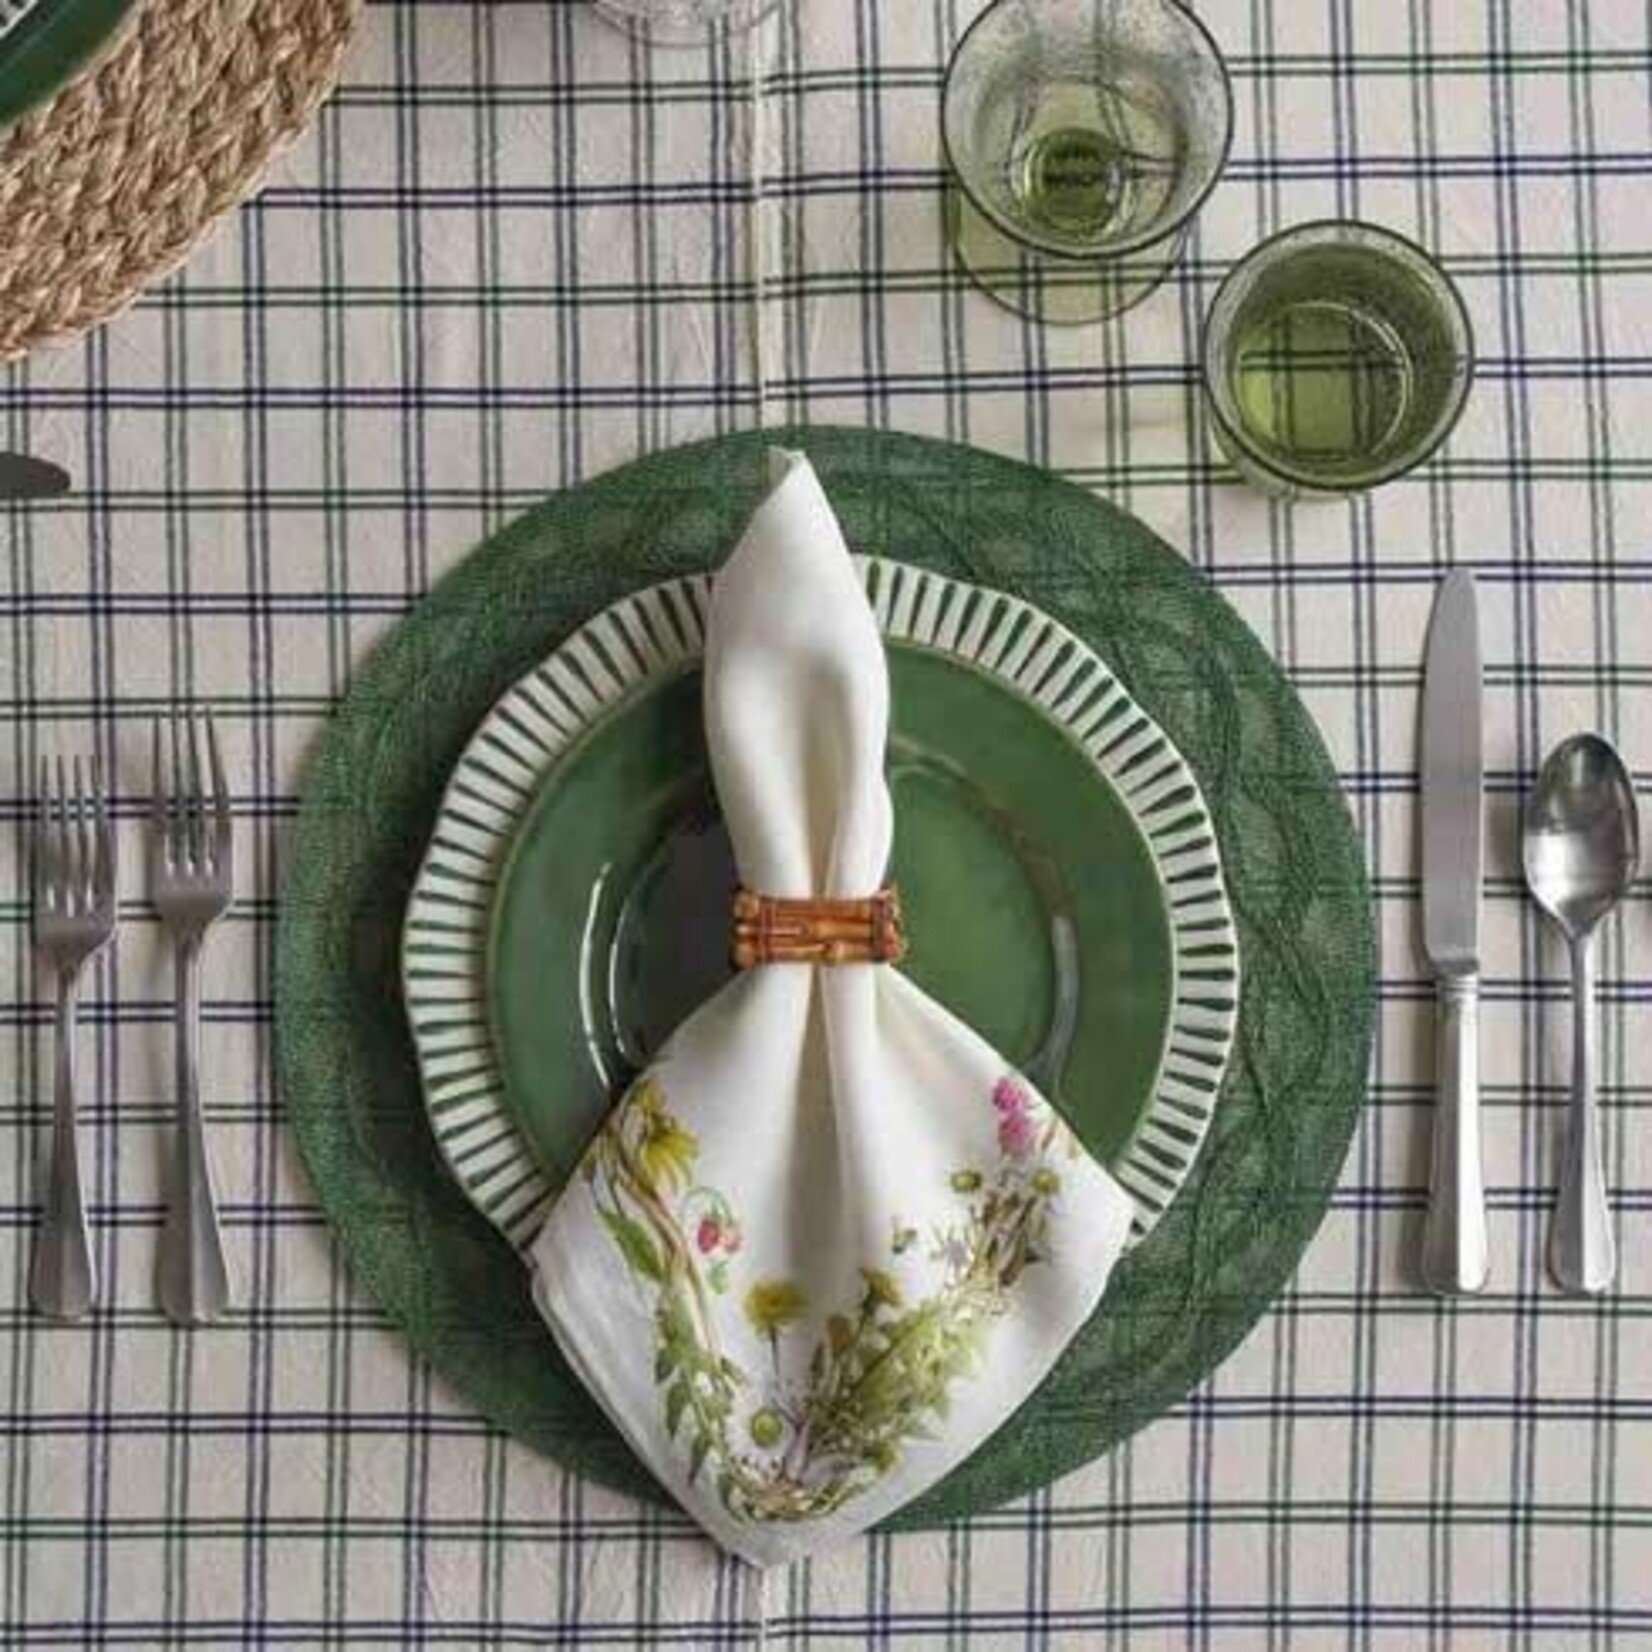 Juliska Sitio Stripe Dinner Plate - Basil